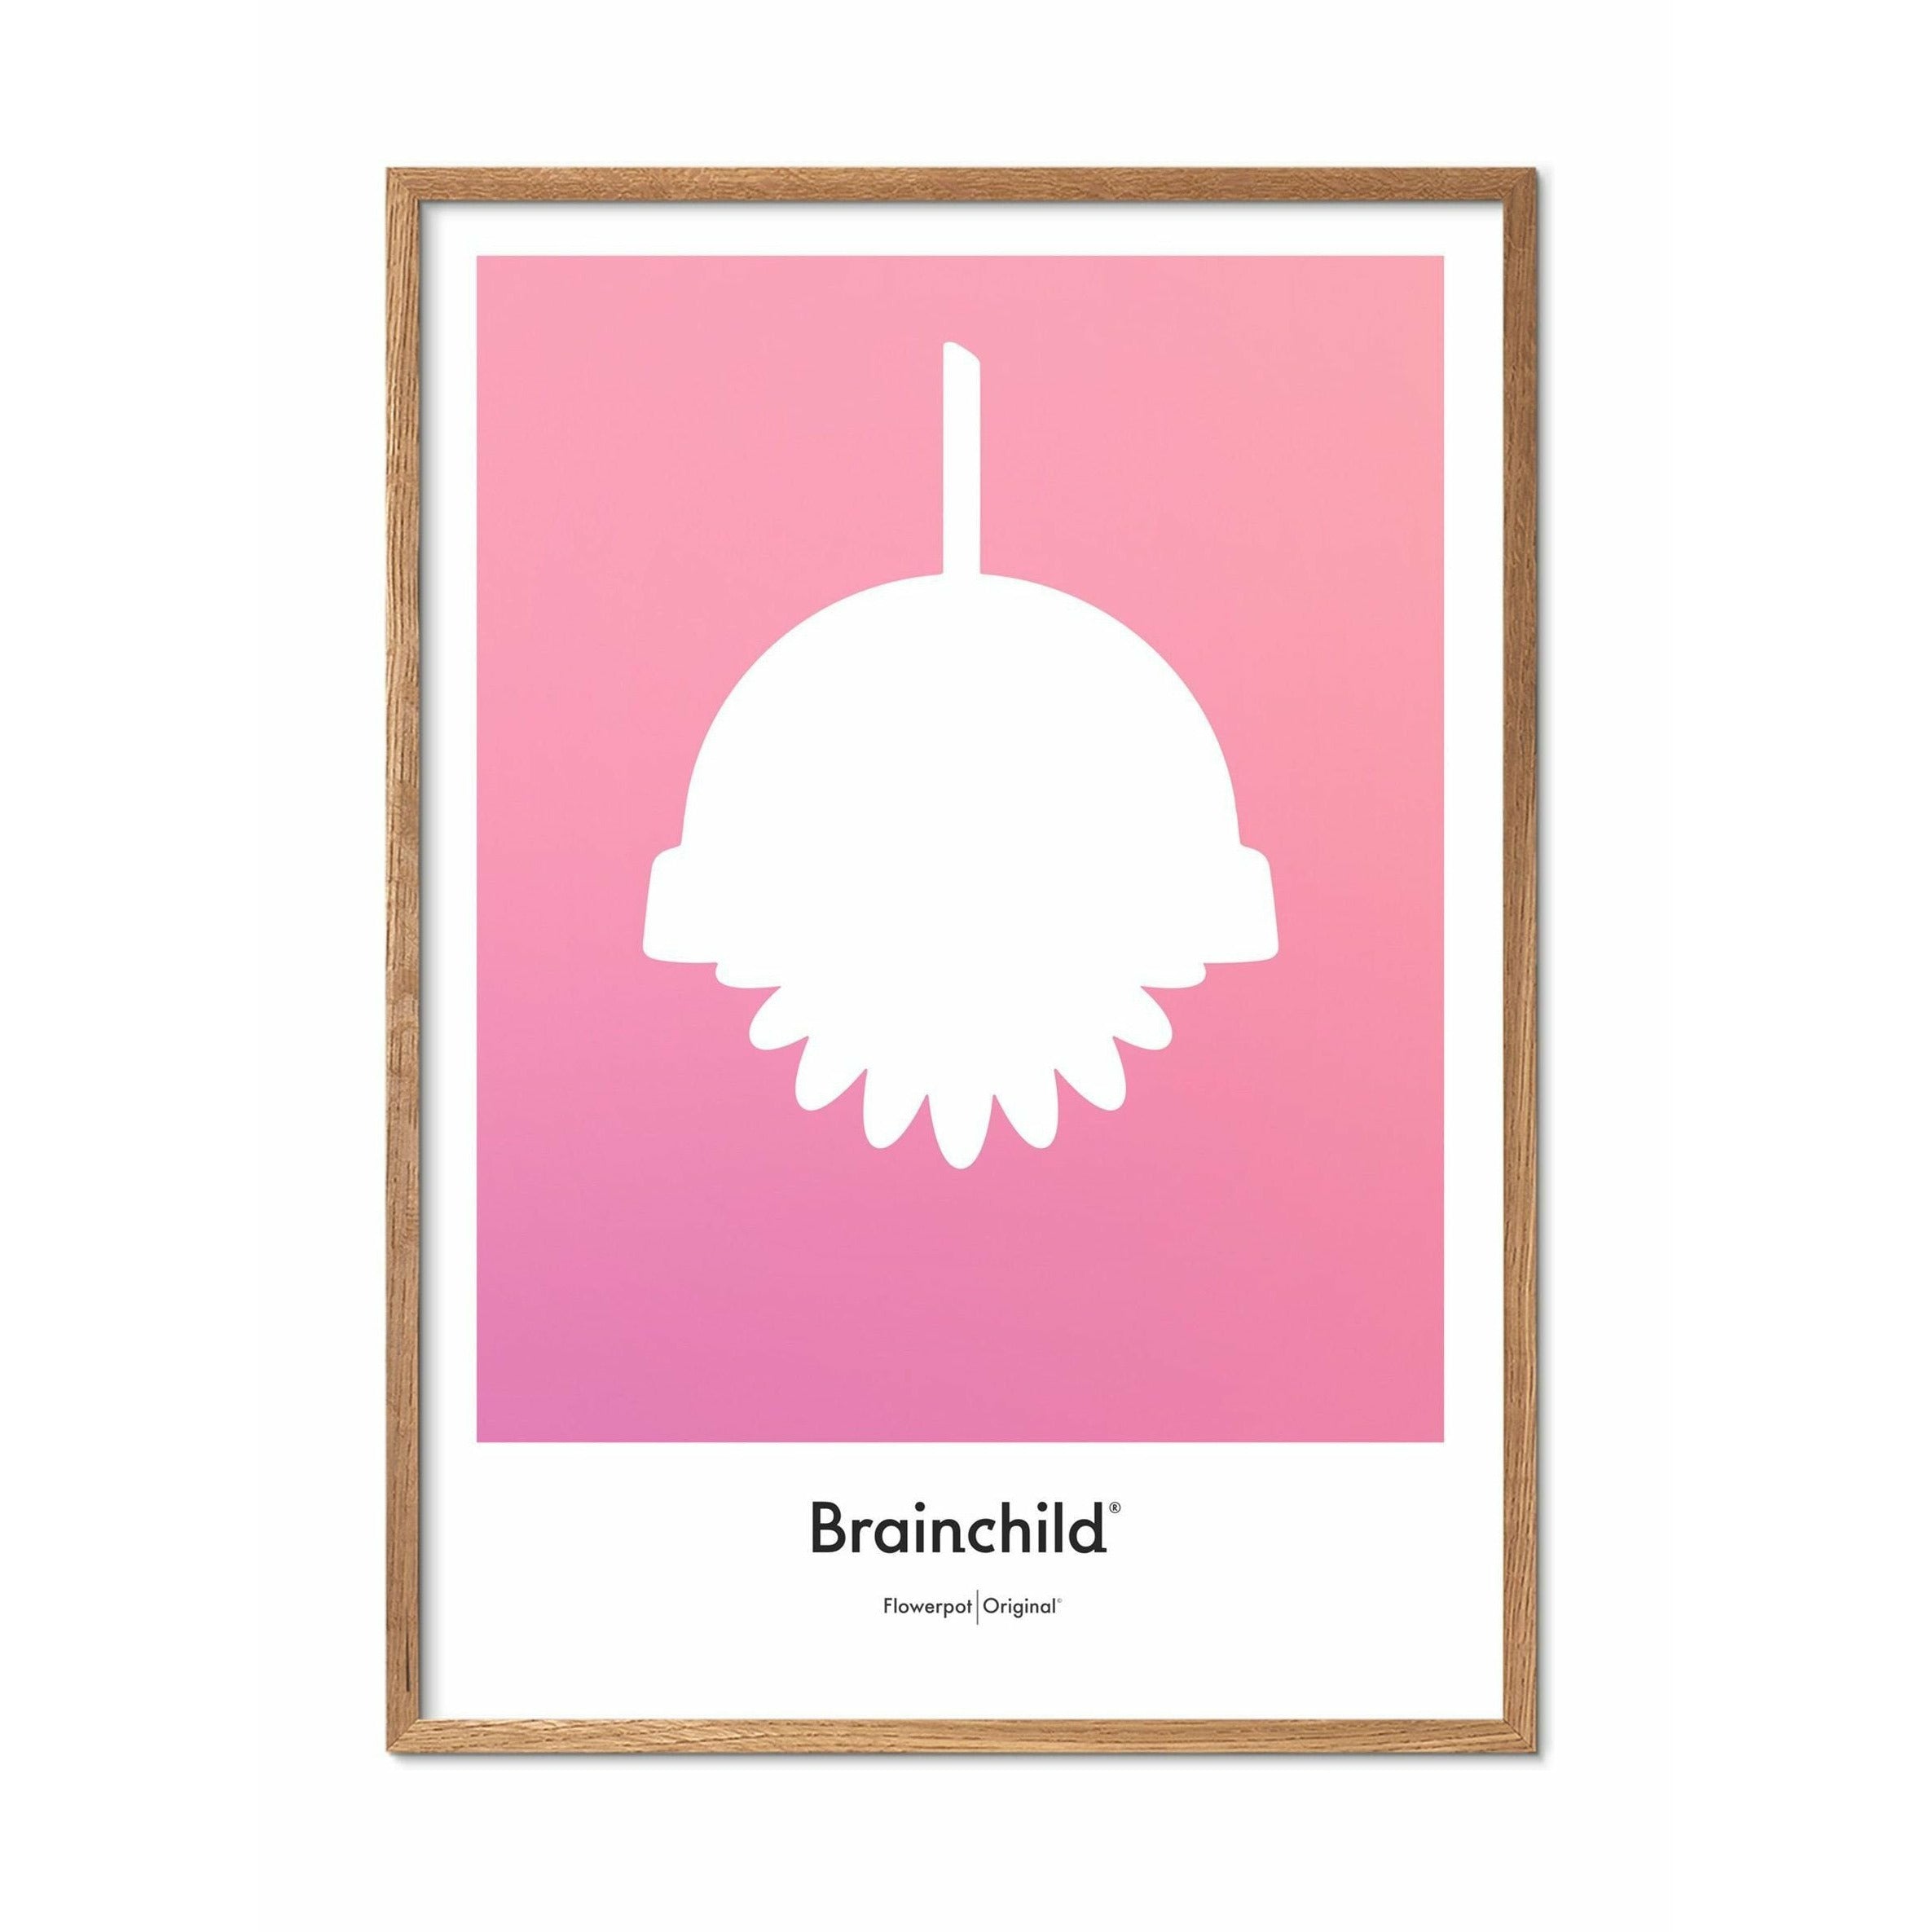 Brainchild Flowerpot Designikon Plakat, Ramme I Lyst Træ 30X40 Cm, Rosa